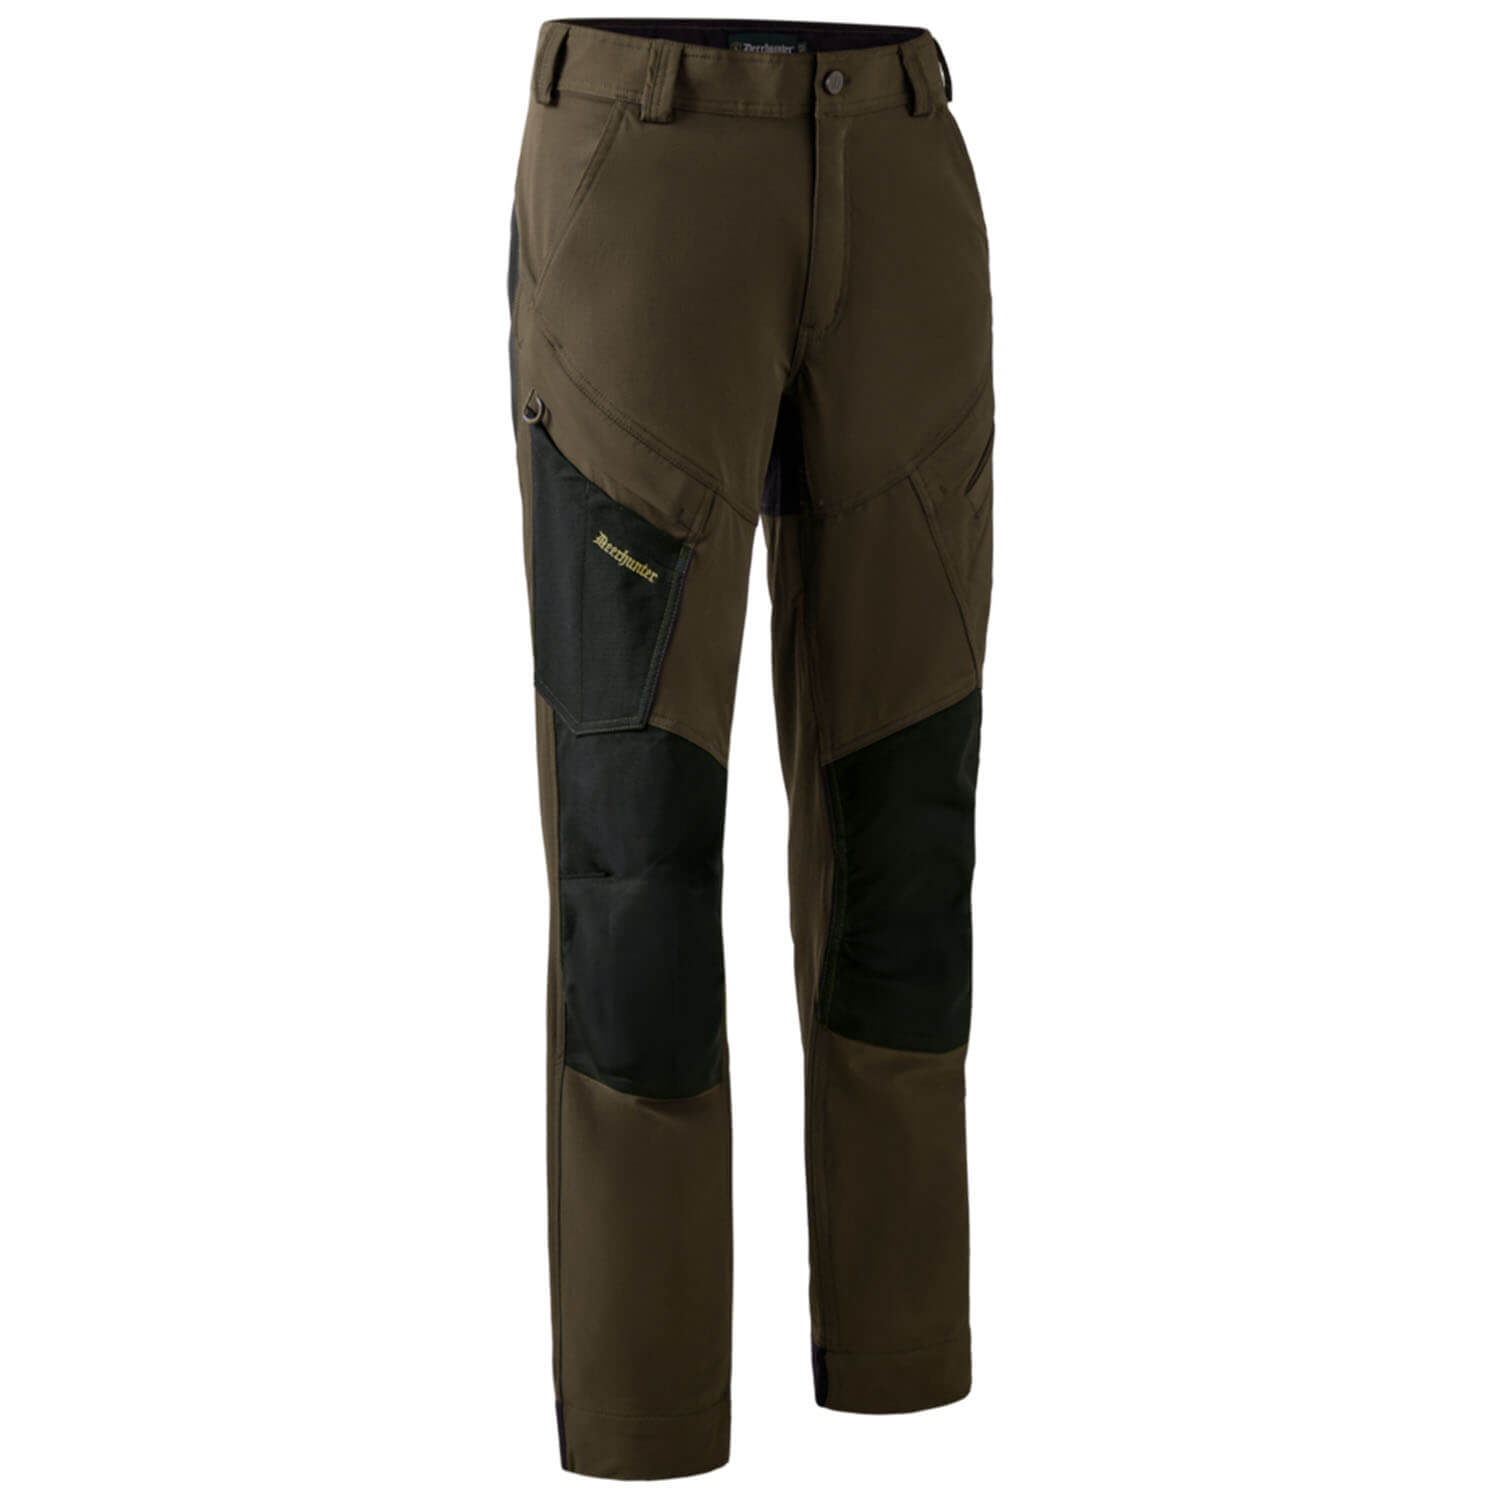 Deerhunter trousers Northward (bark green/black) - Men's Hunting Clothing